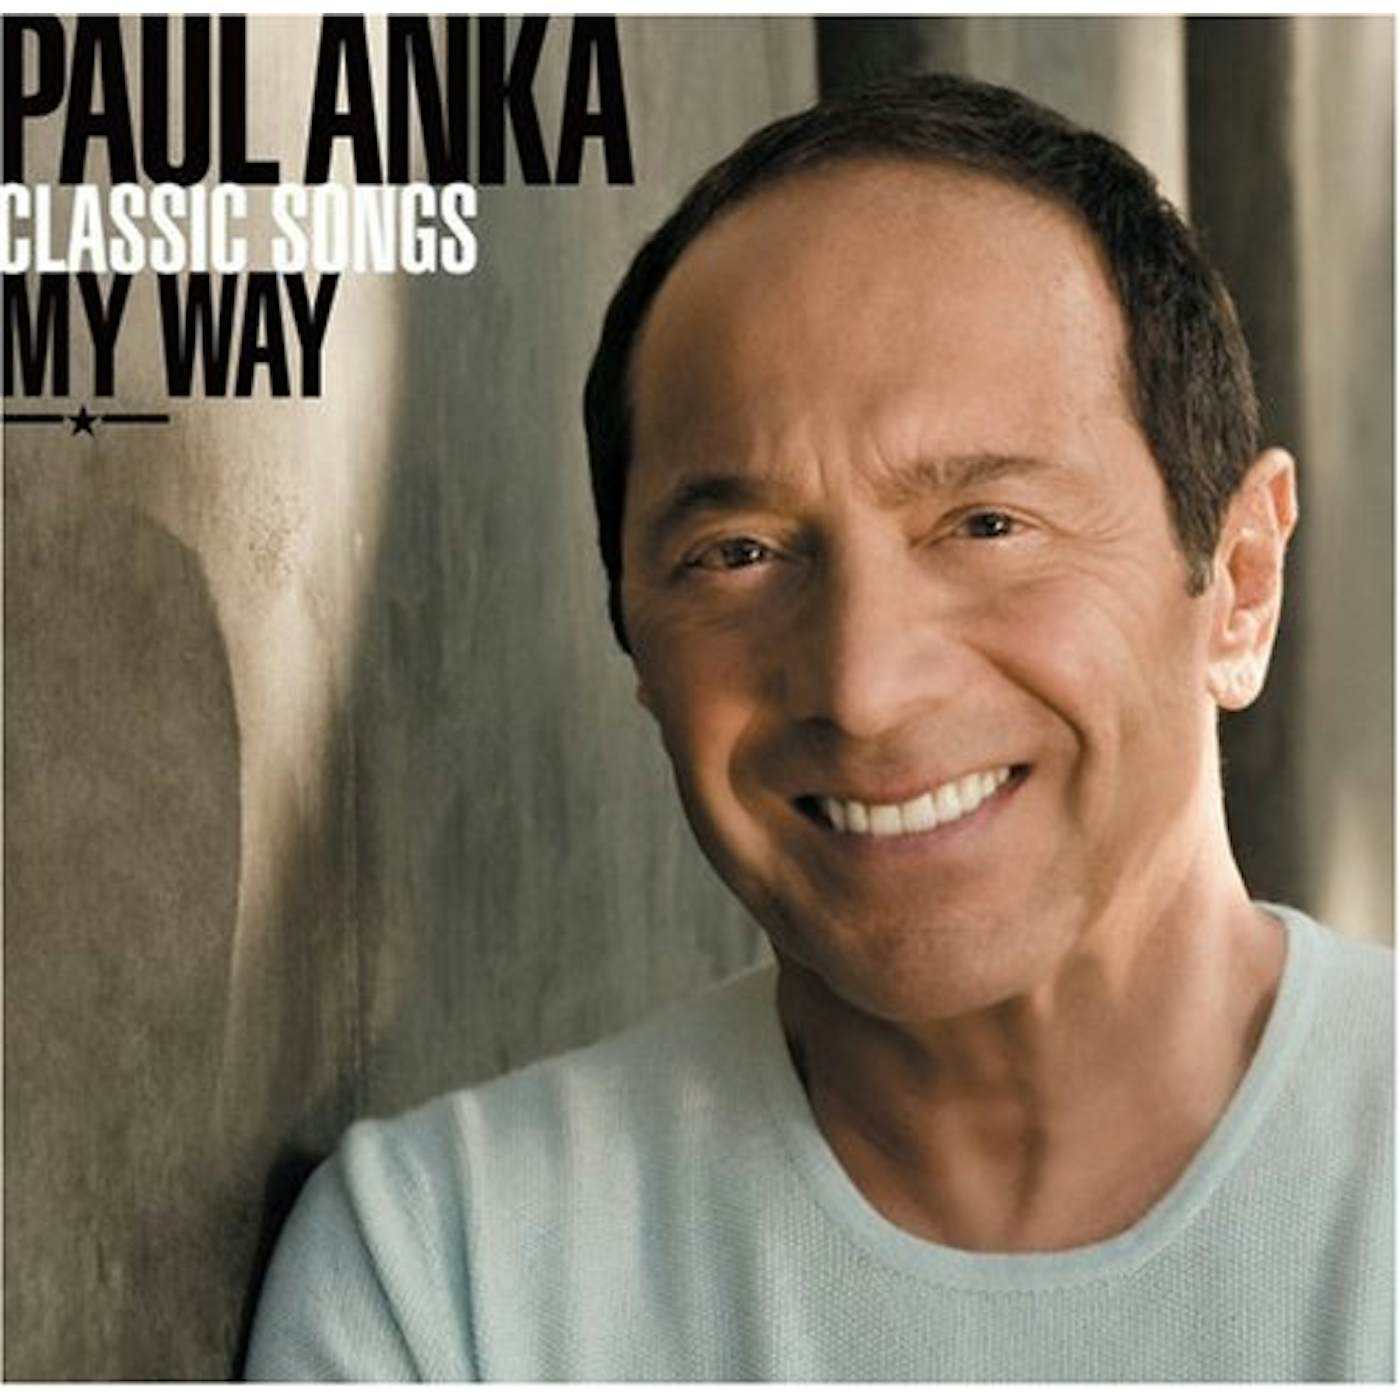 Paul Anka CLASSIC SONGS MY WAY CD